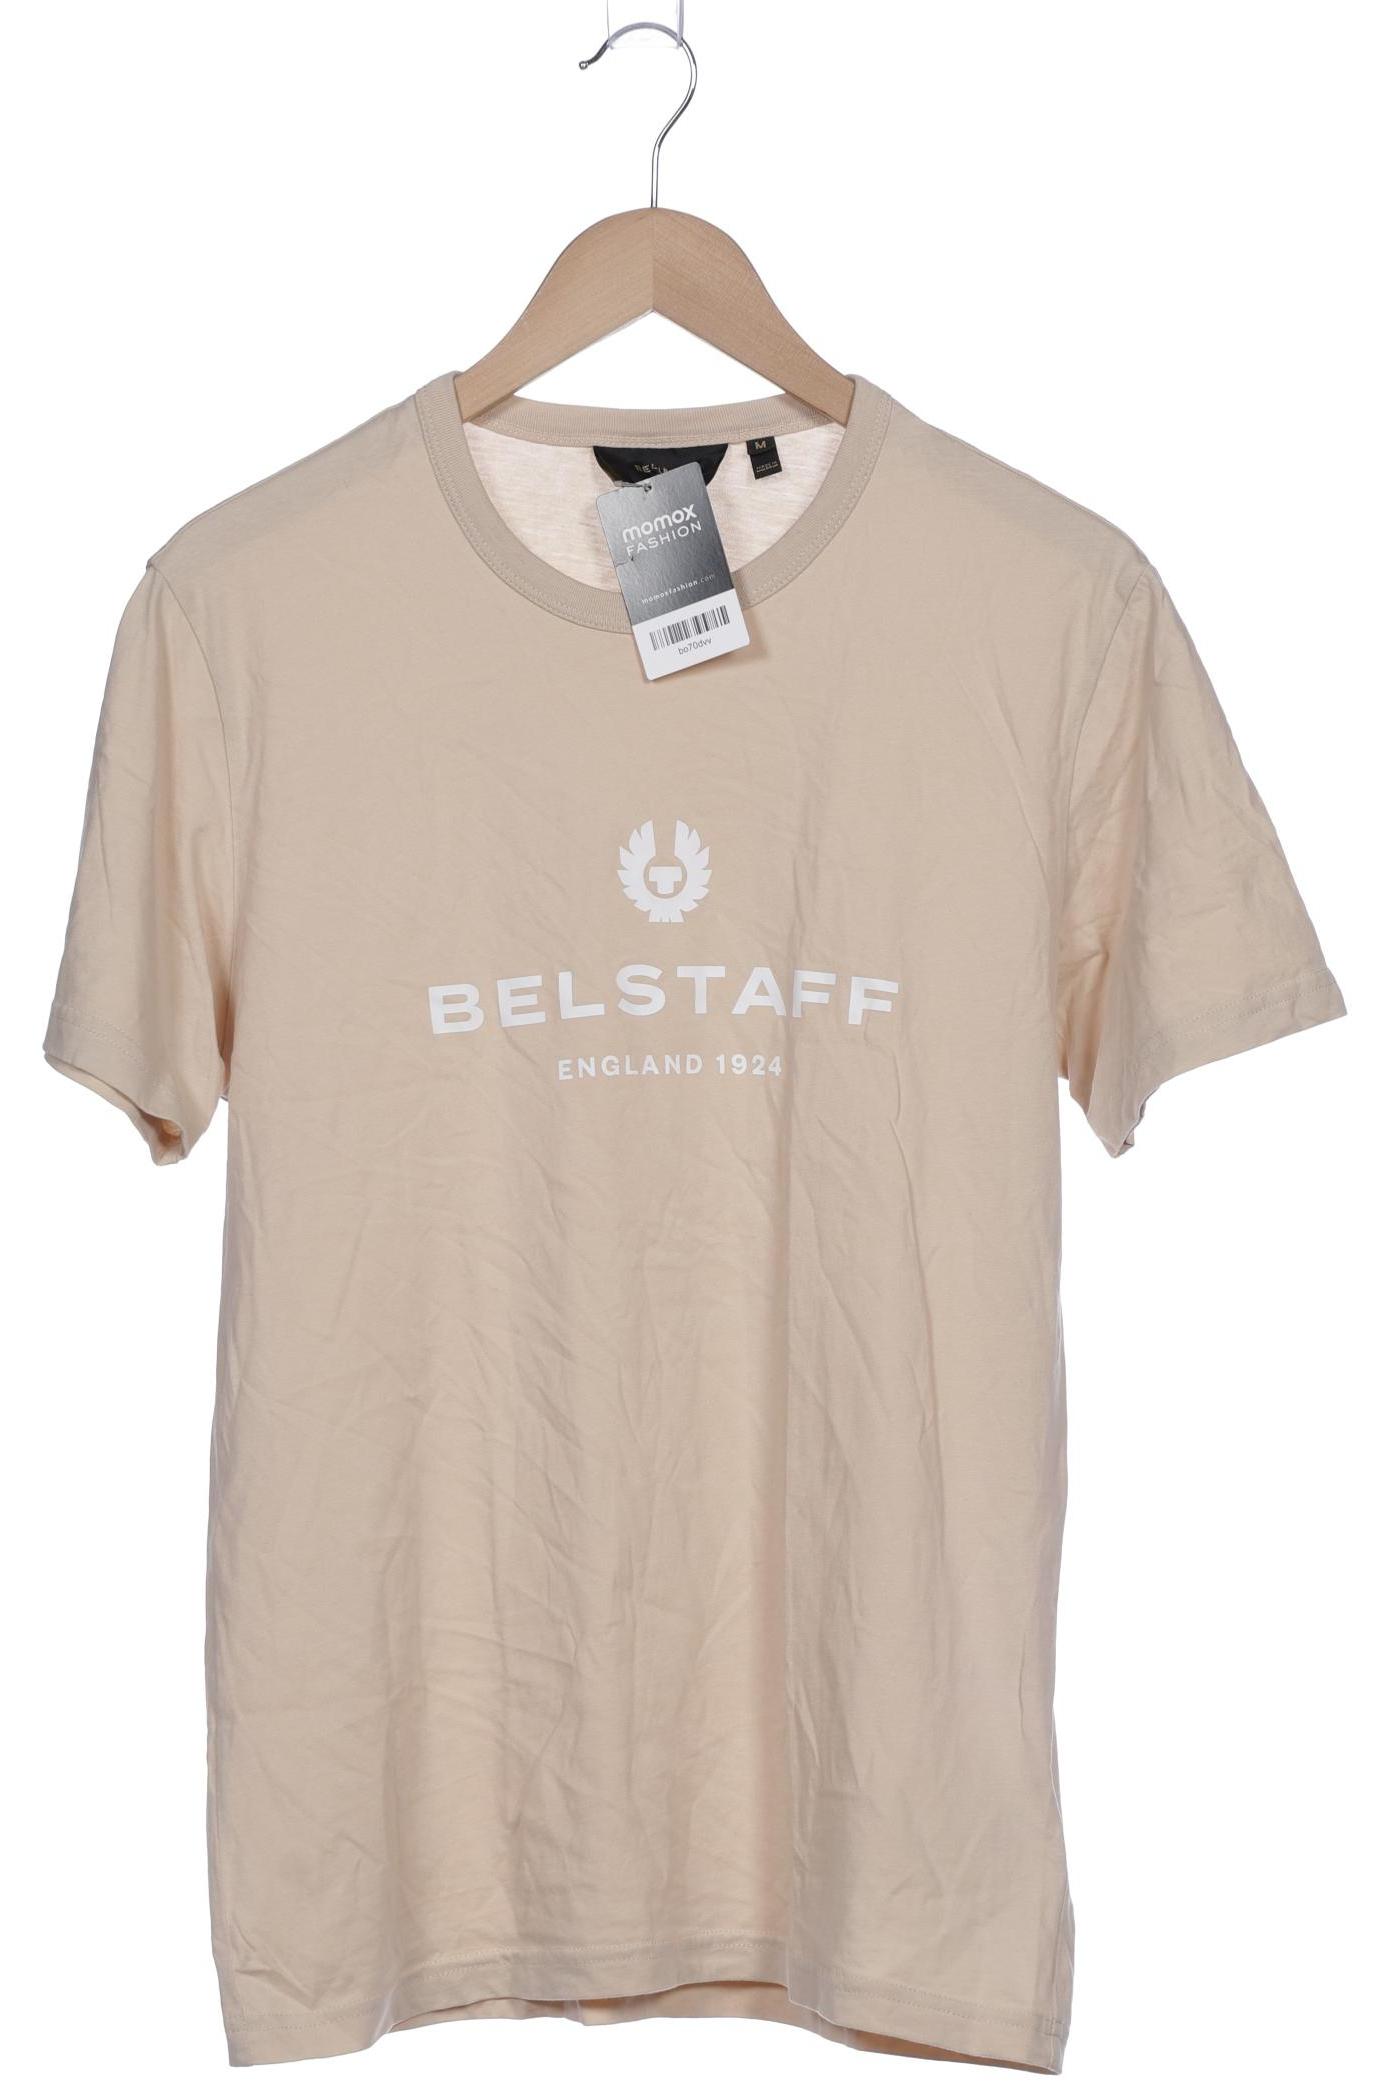 Belstaff Herren T-Shirt, beige von Belstaff